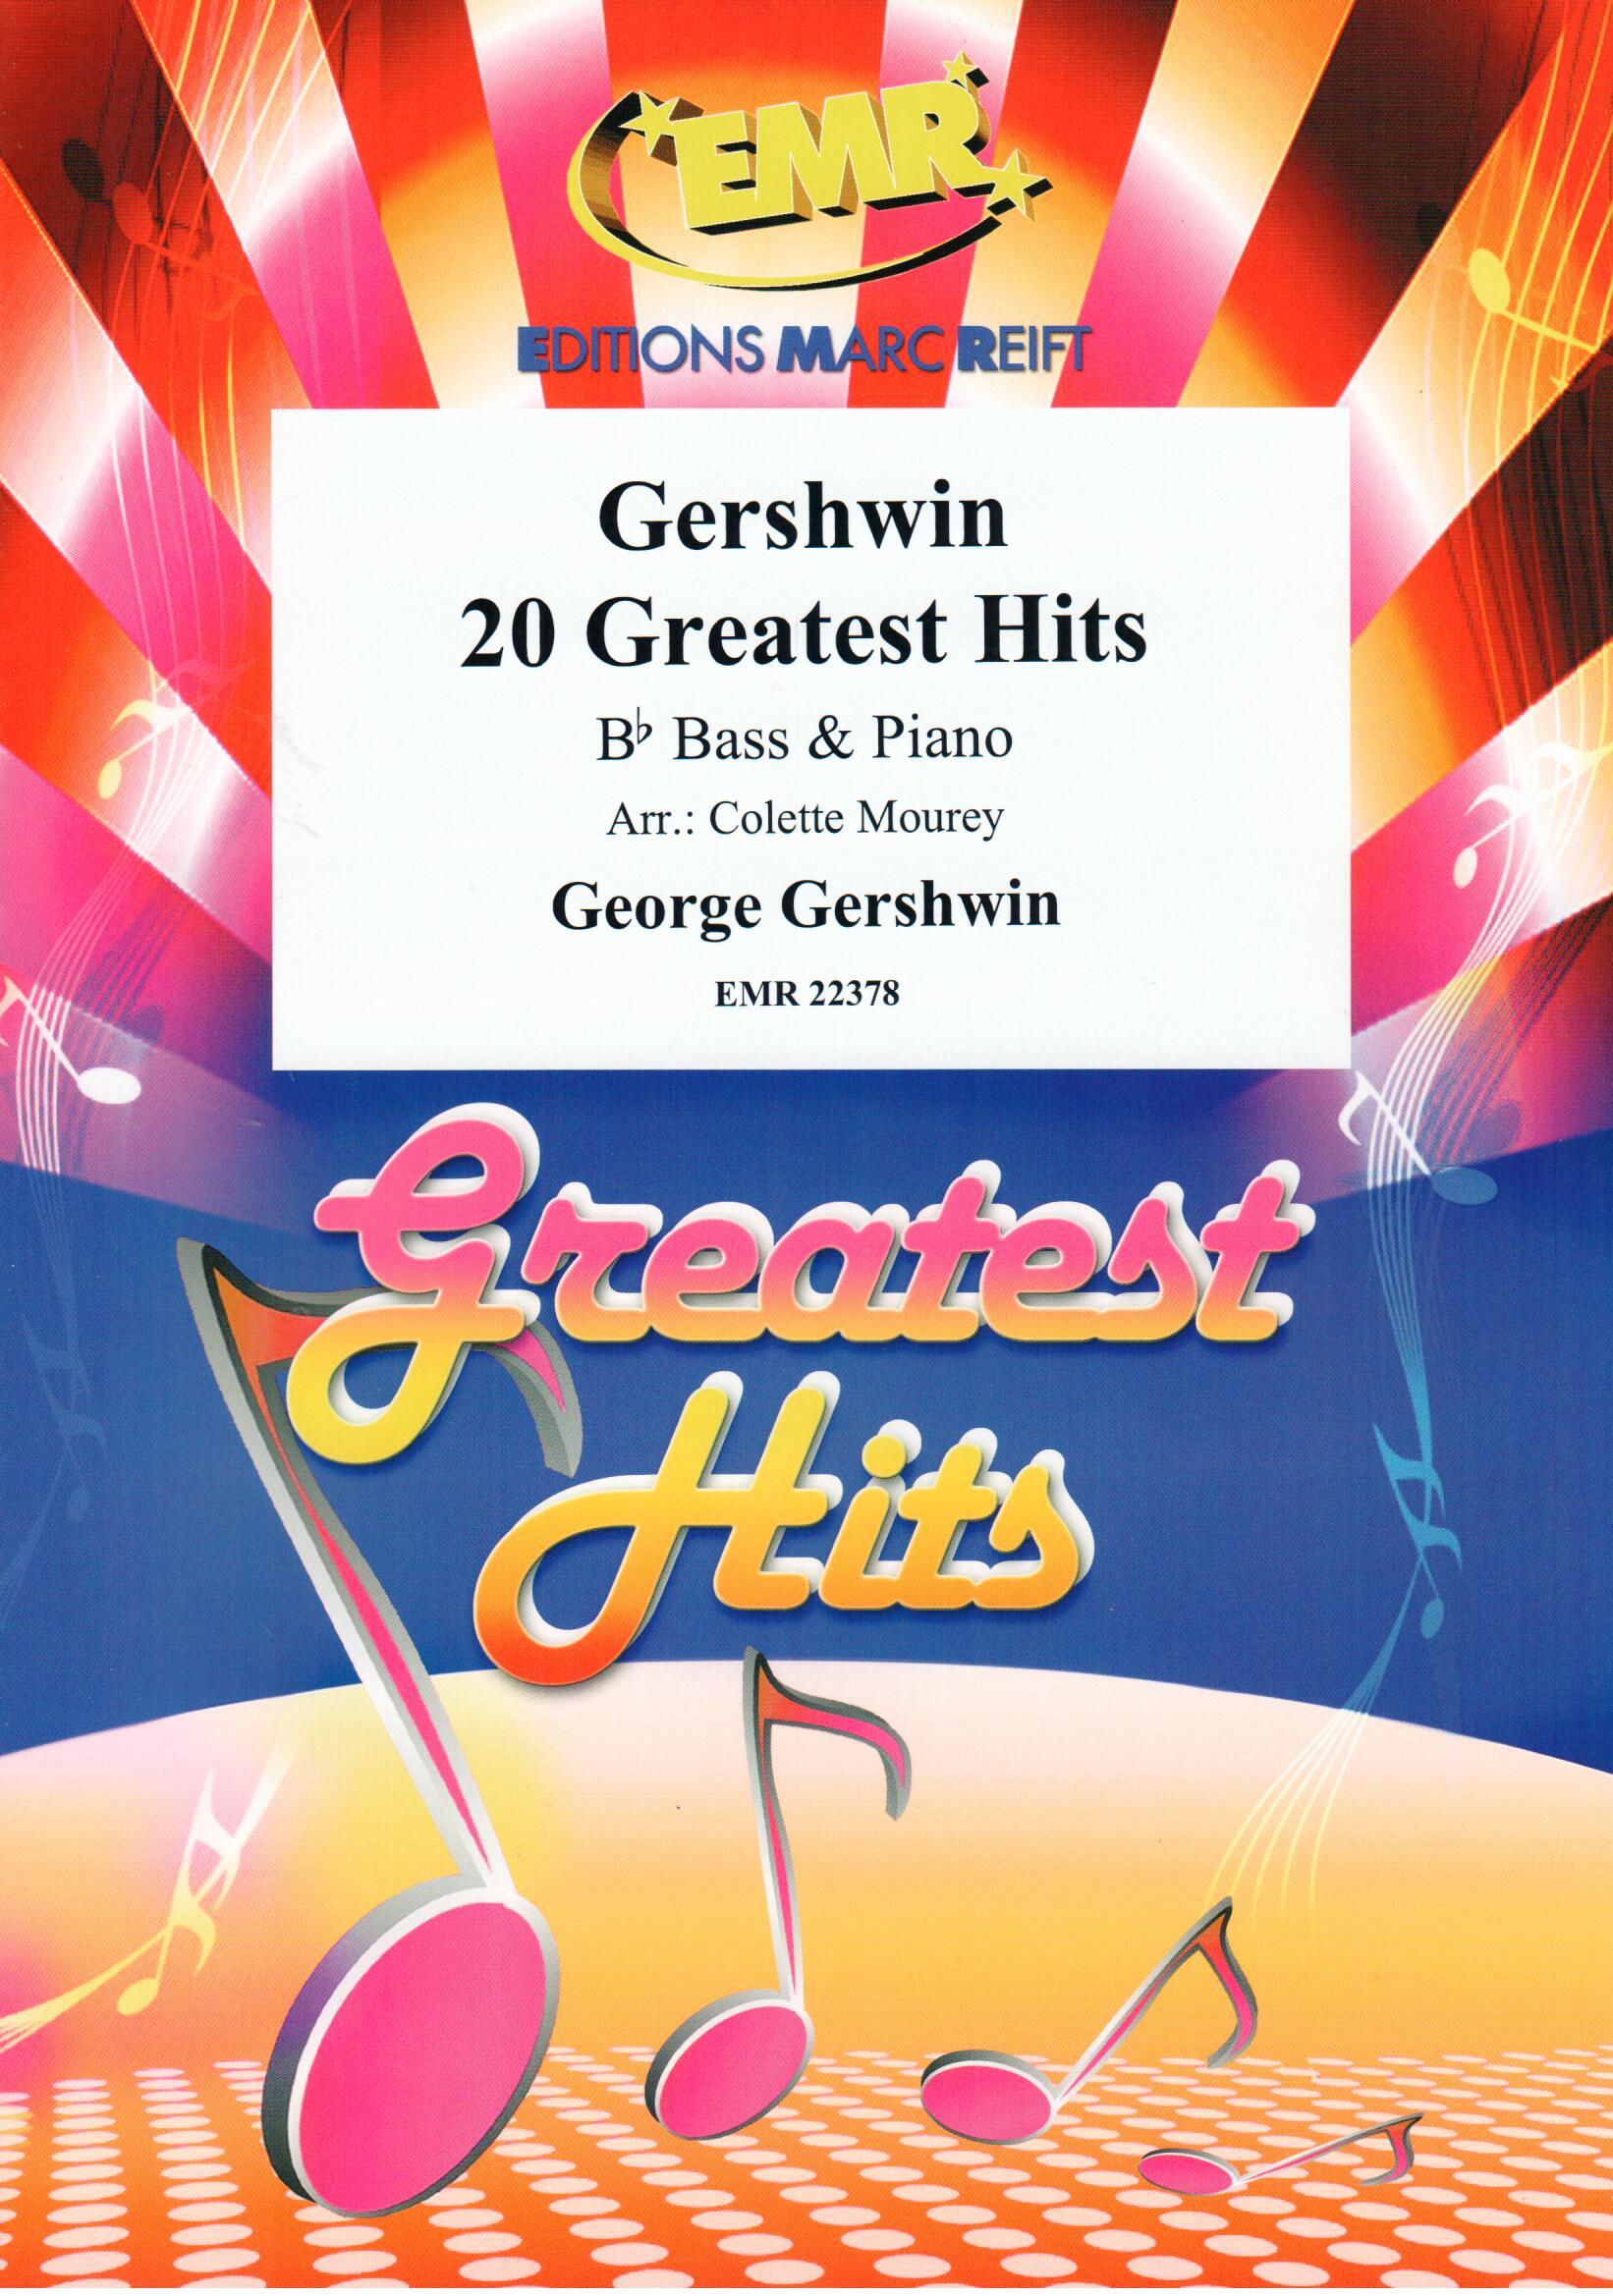 GERSHWIN 20 GREATEST HITS